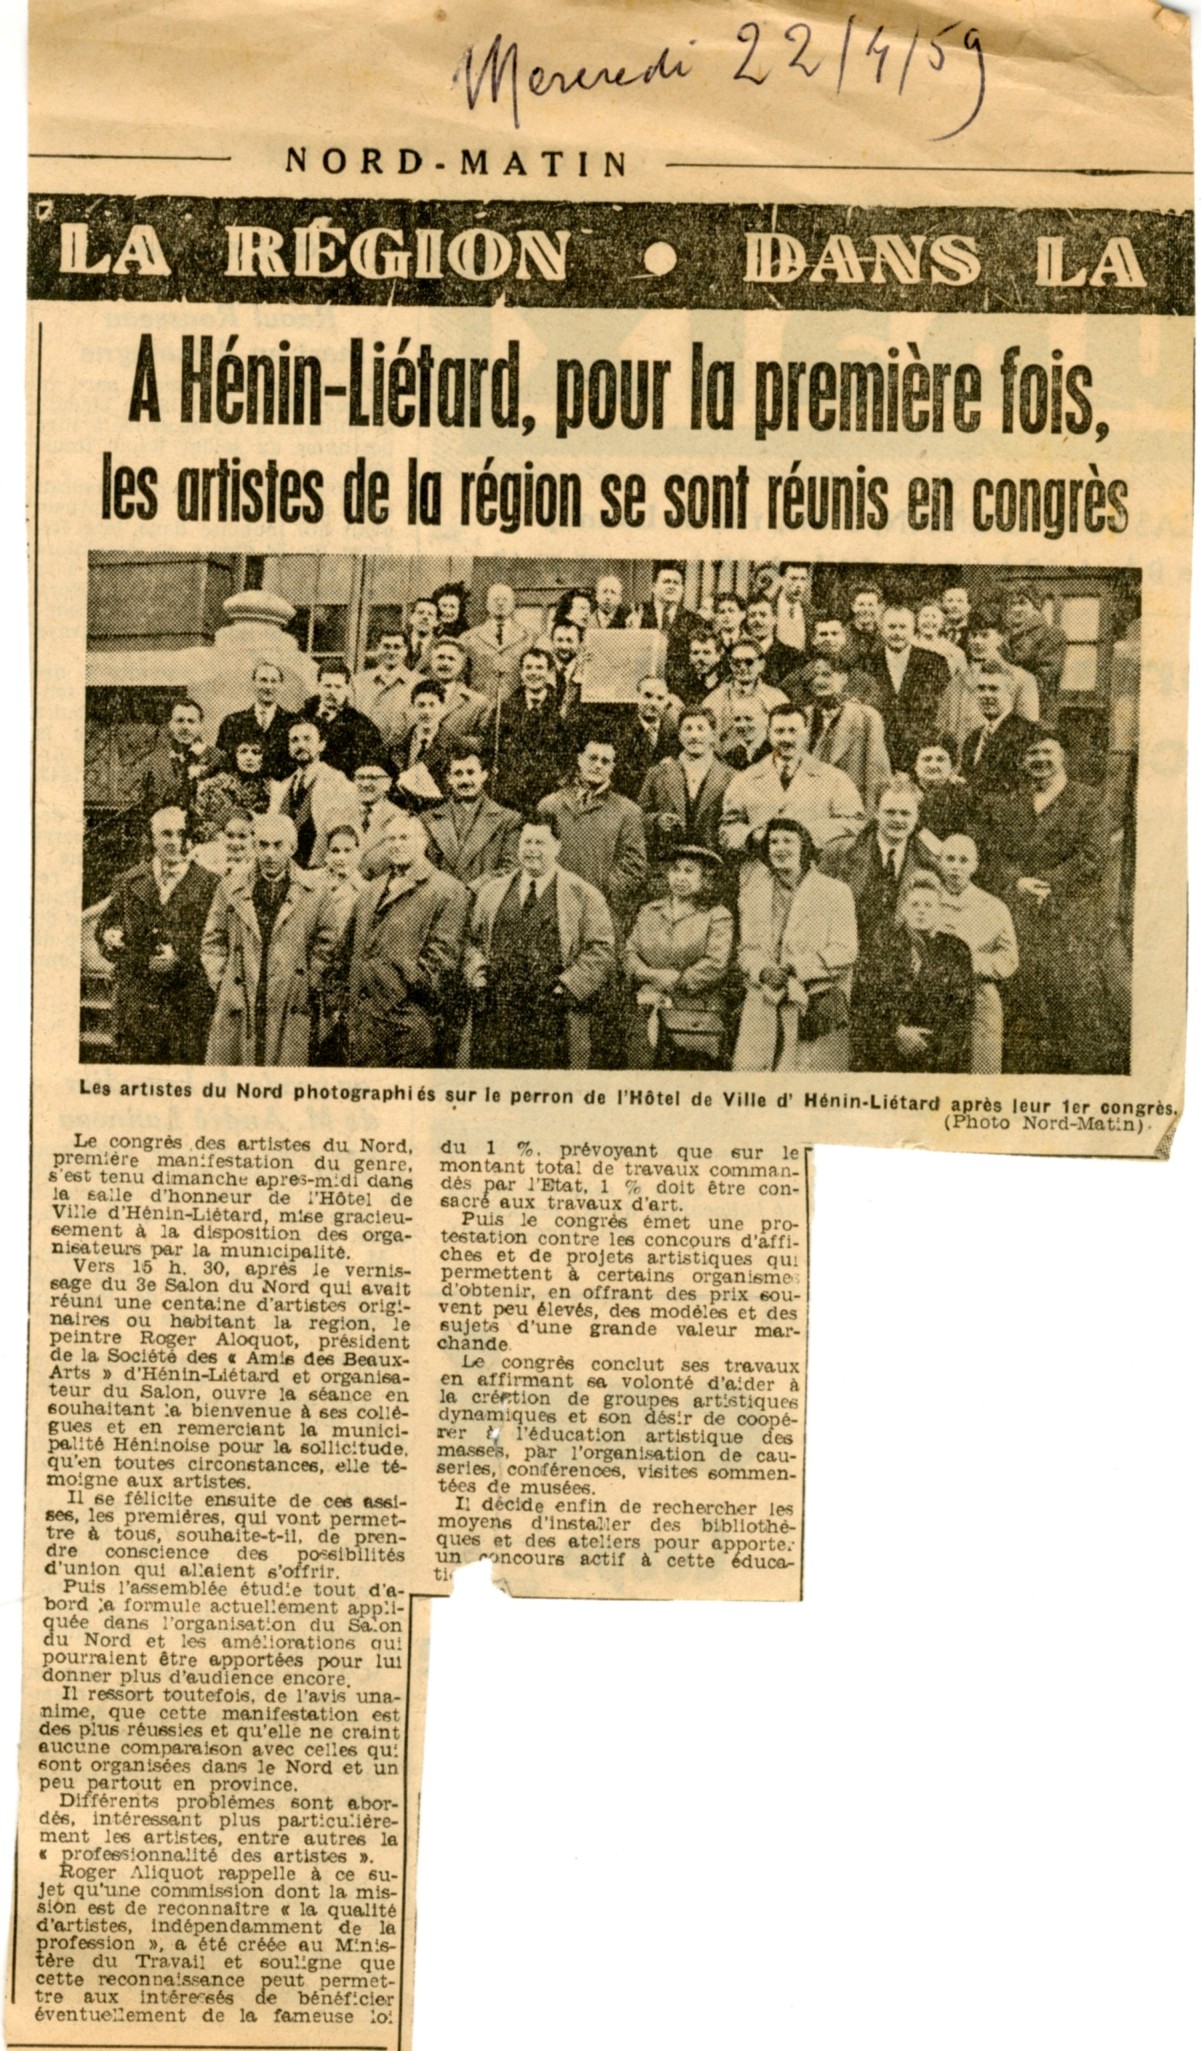 Nord-Matin : premier congrès des artistes du Nord - 19 avril 1959